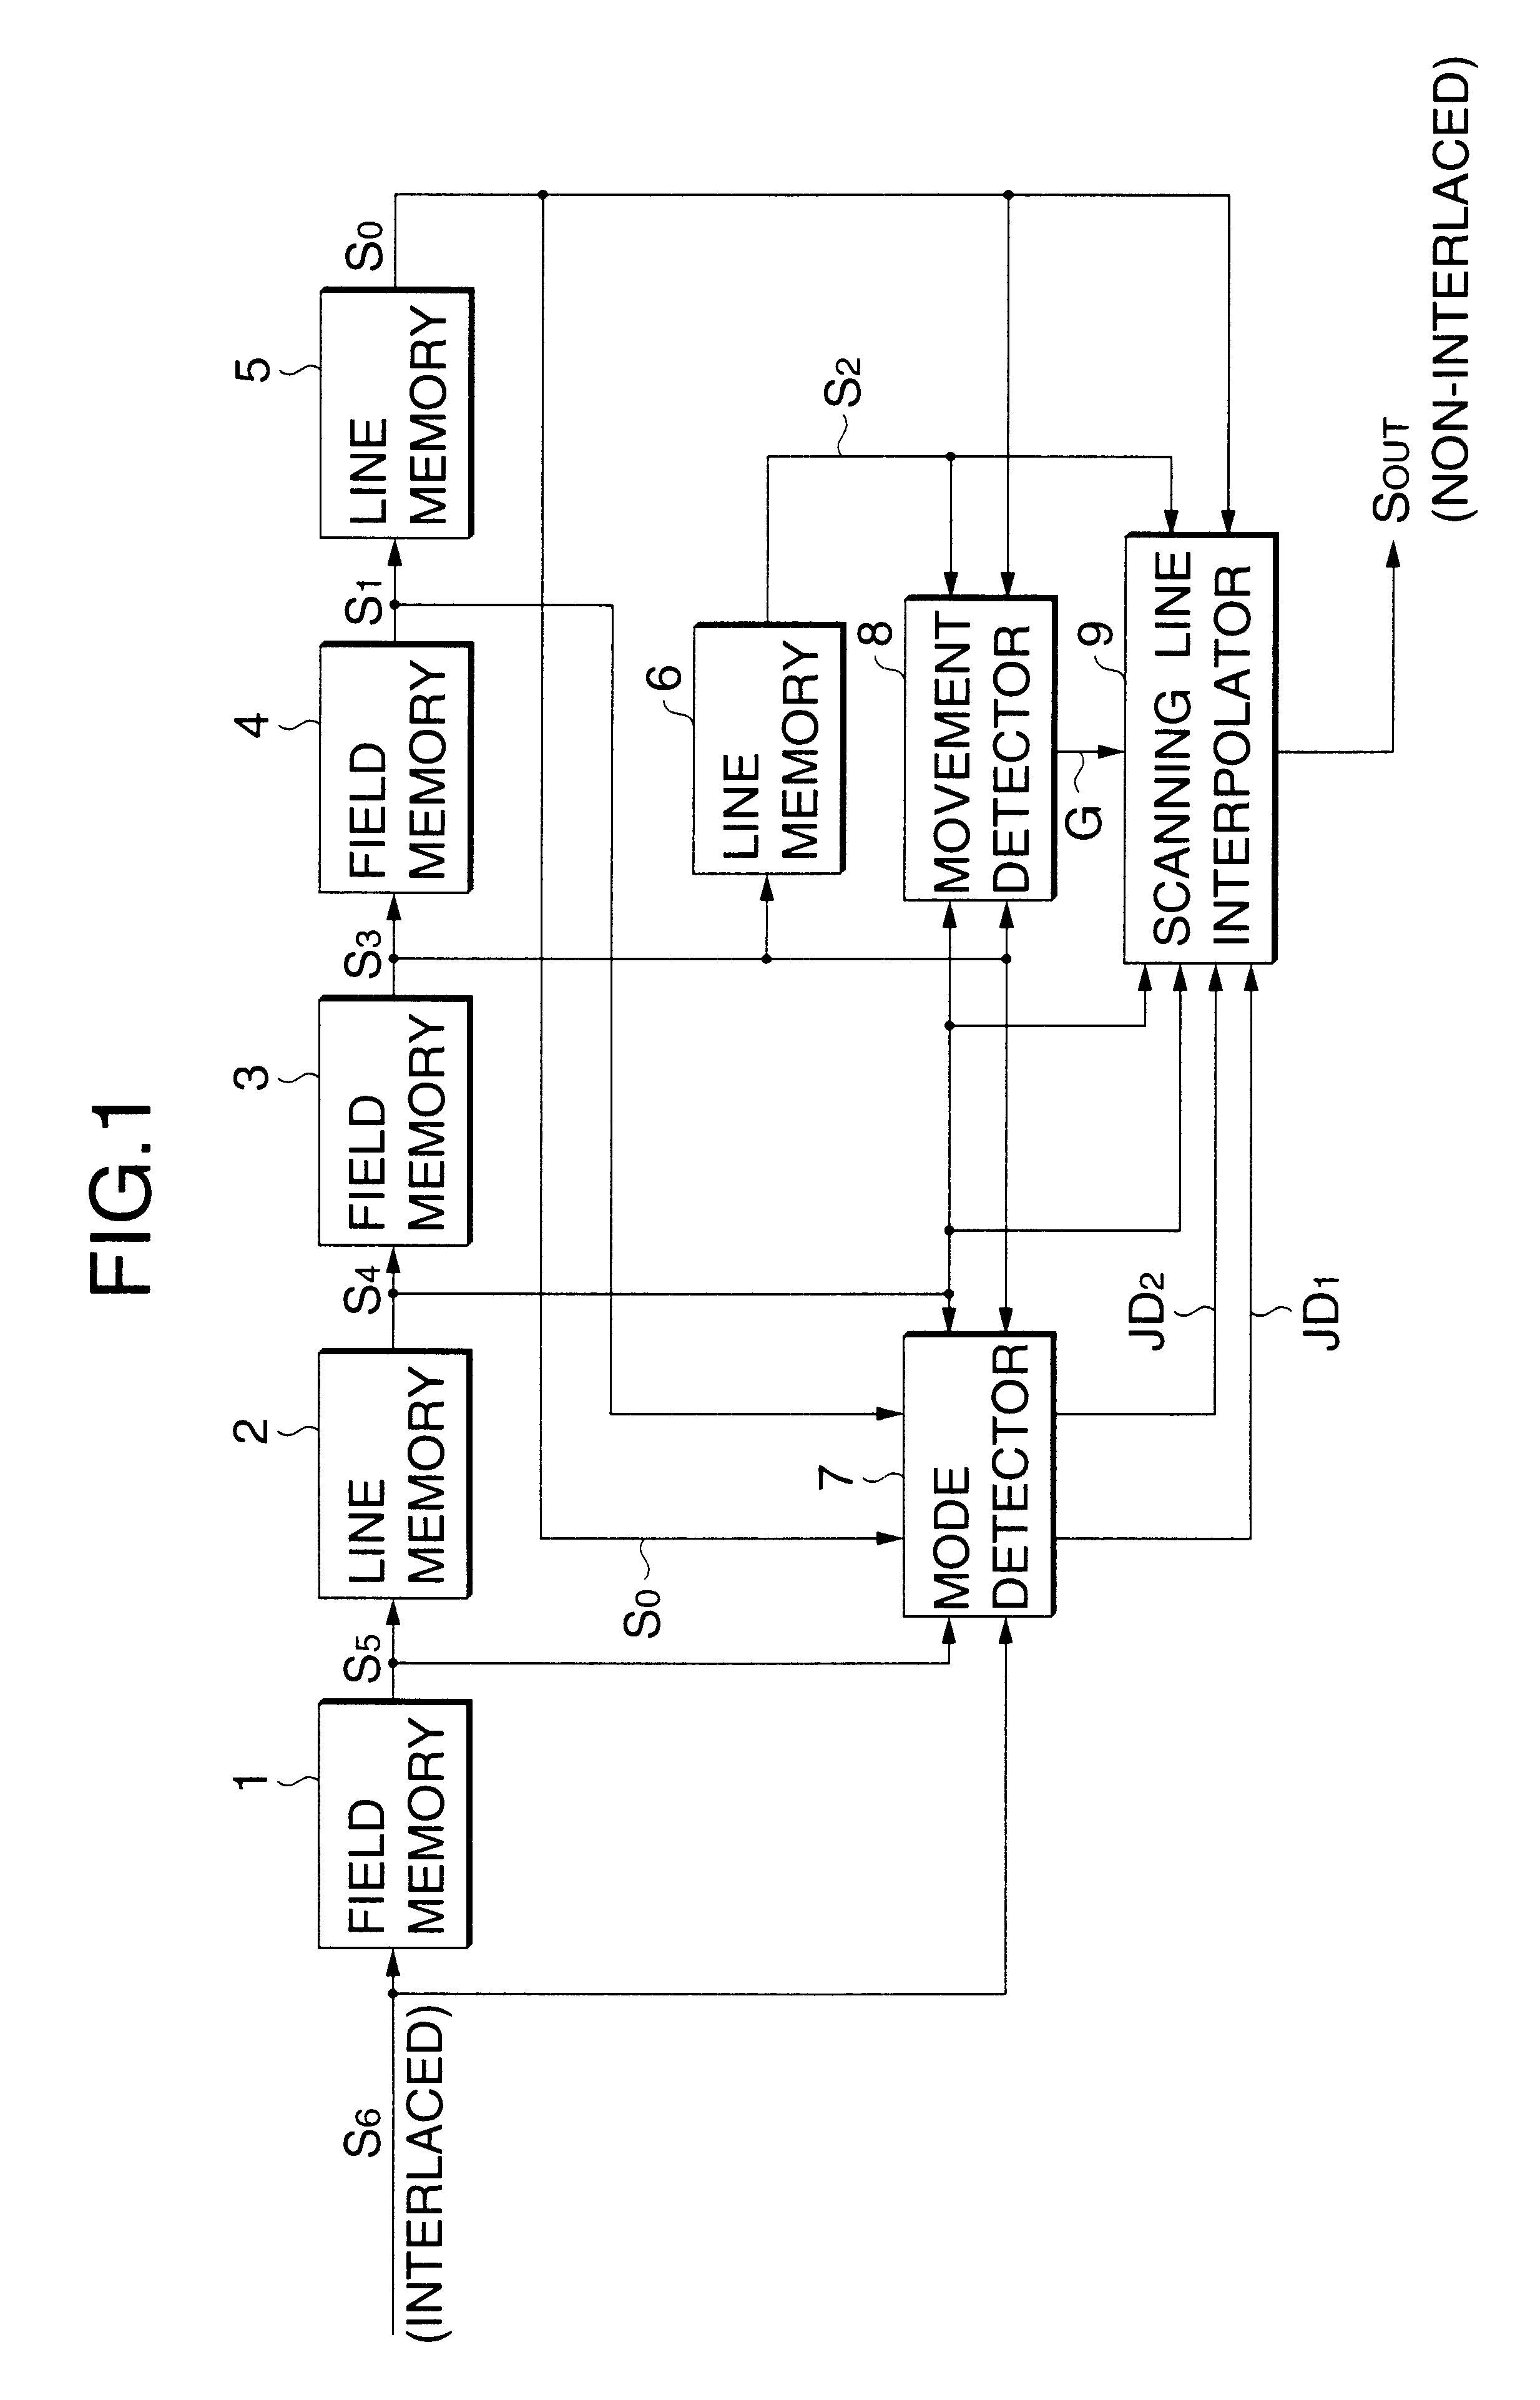 Video signal converting apparatus